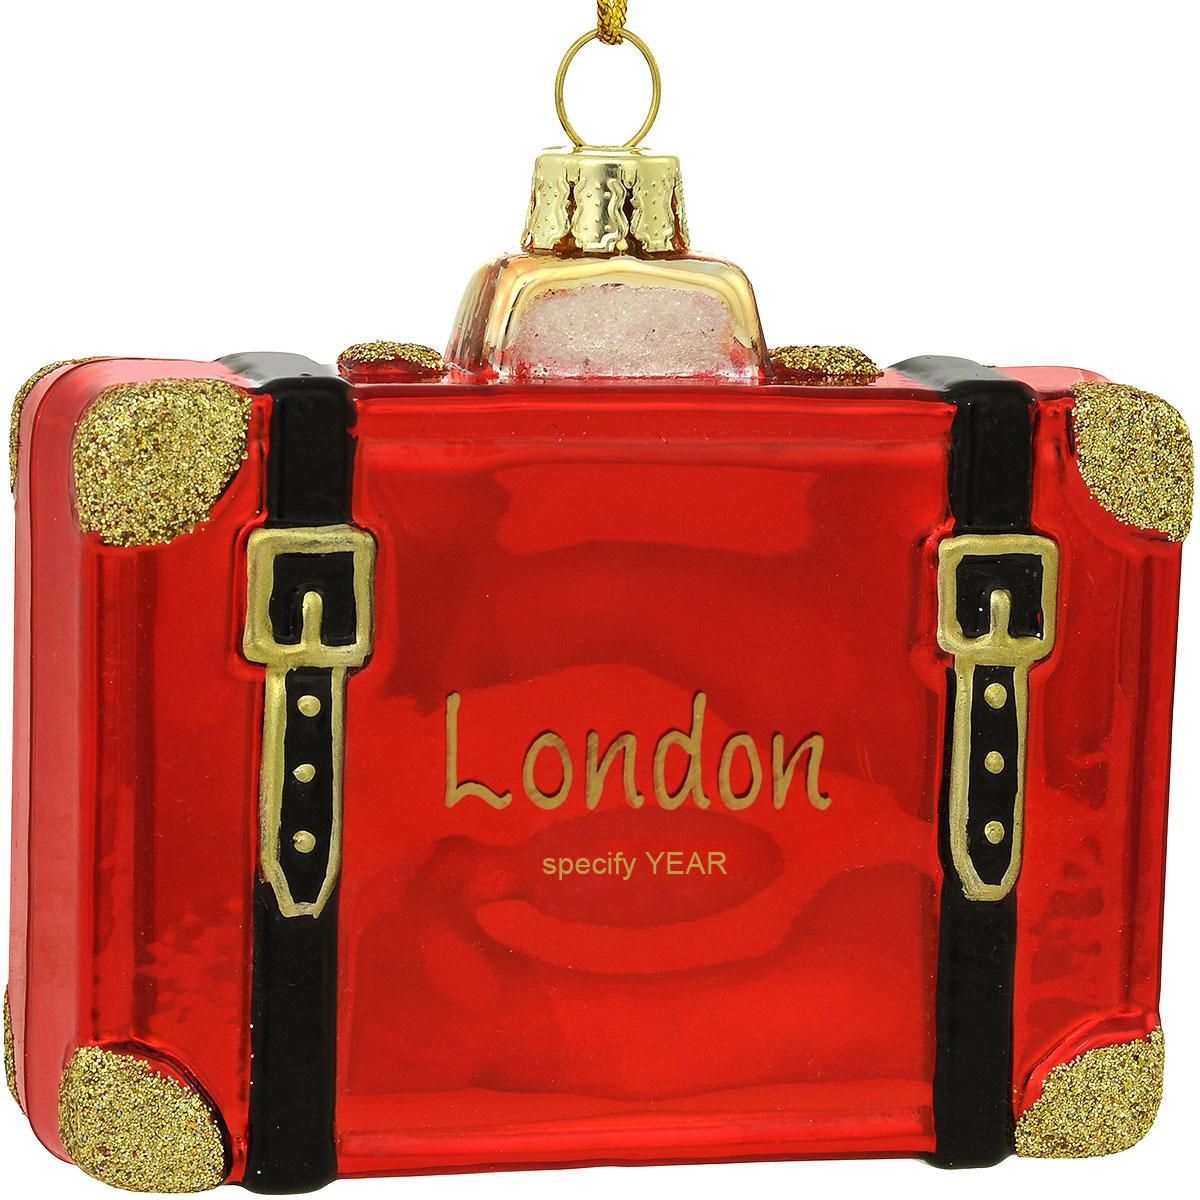 London Suitcase Glass Ornament 